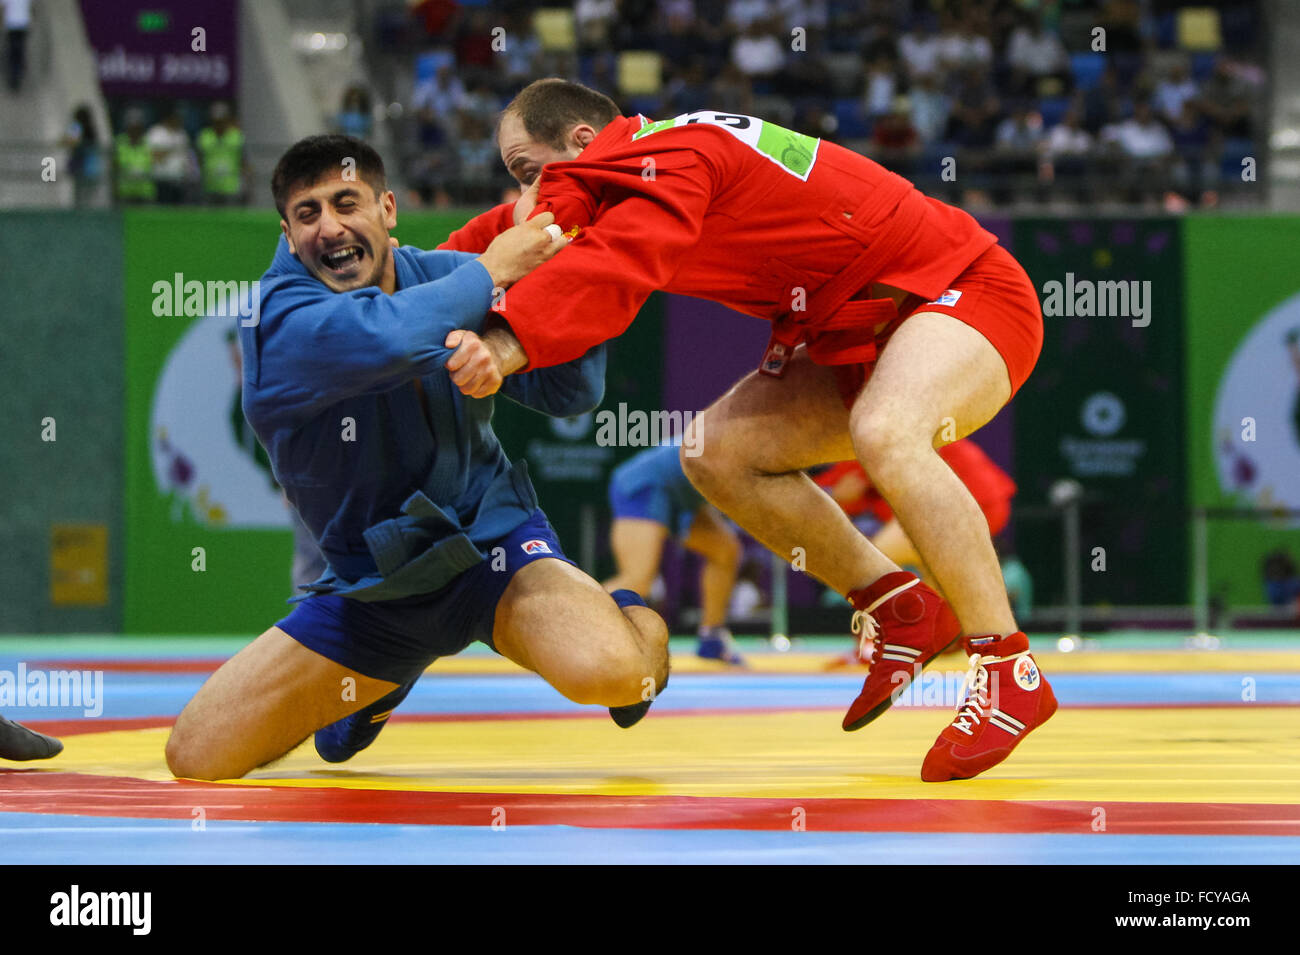 Davit Karbelashvili (GEO, rojo) vs Kanan Gasimov (AZE, azul). Medalla de Bronce. Hombre de 90 kg. Sambo. Heydar Aliyev Arena. Bakú2015. 1 Juegos de Europa. Bakú. Azerbaiyán. 22/06/2015 Foto de stock